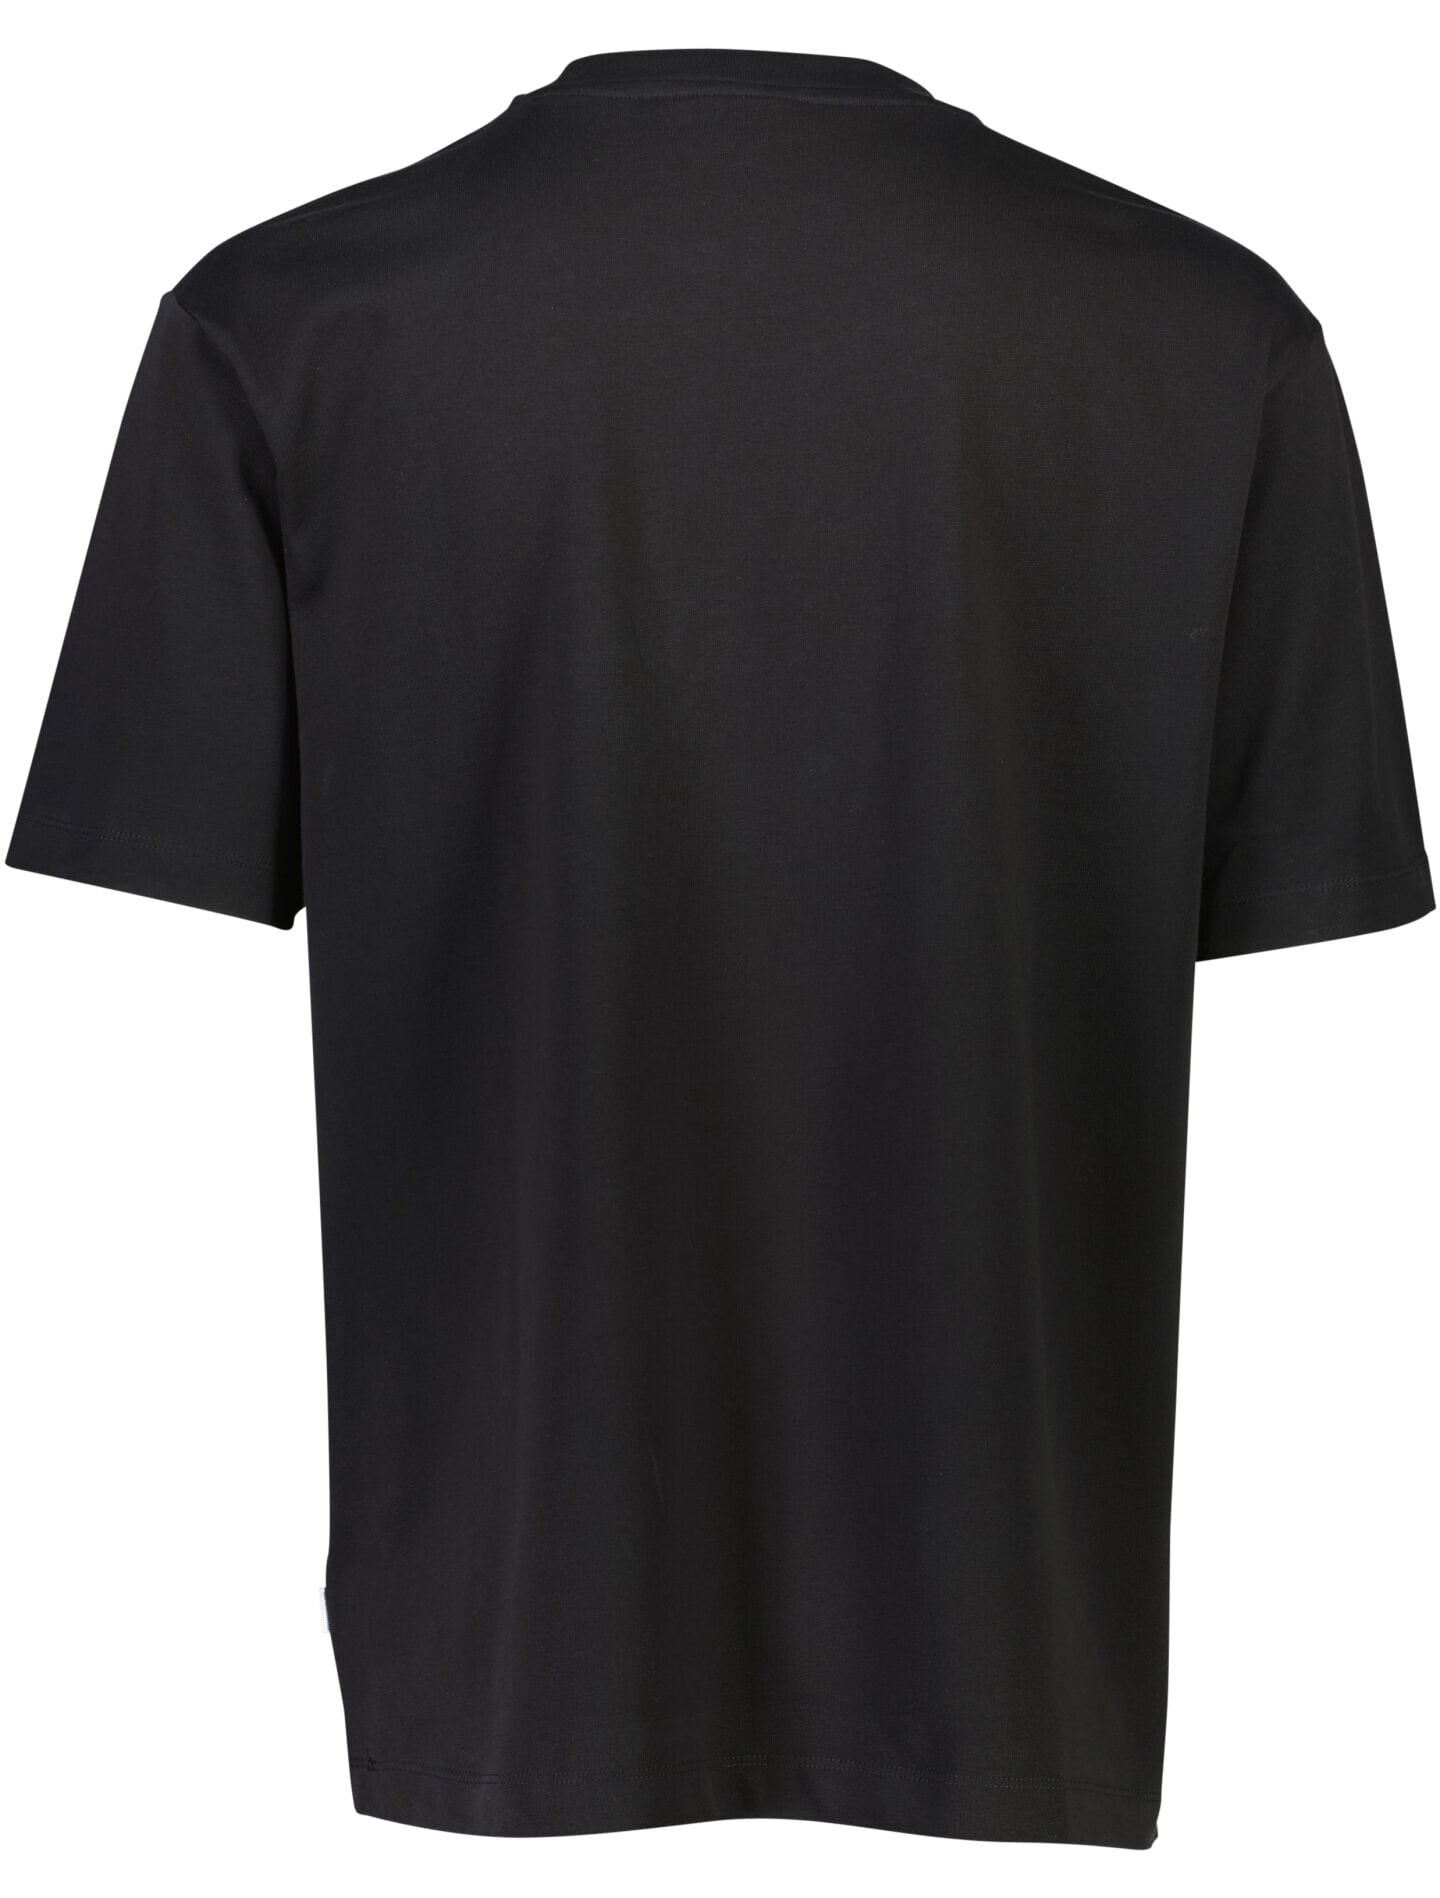 Oversize T-shirt - Black